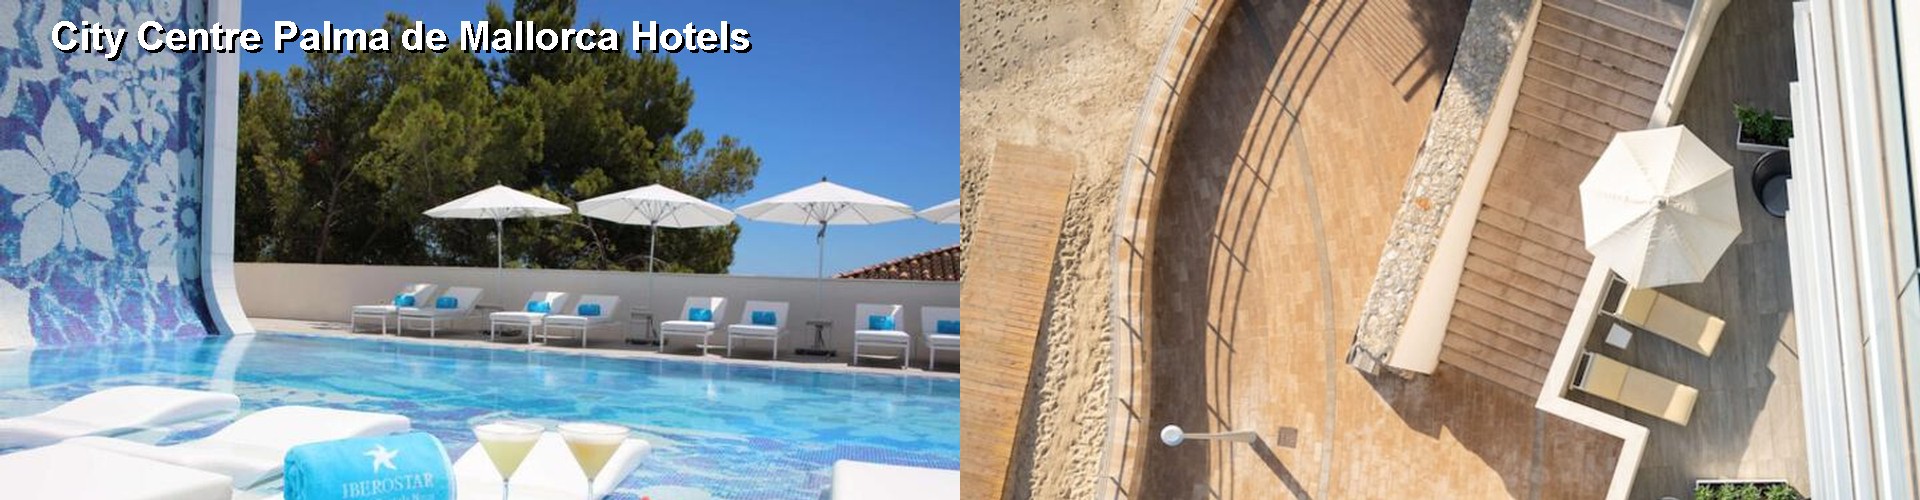 5 Best Hotels near City Centre Palma de Mallorca